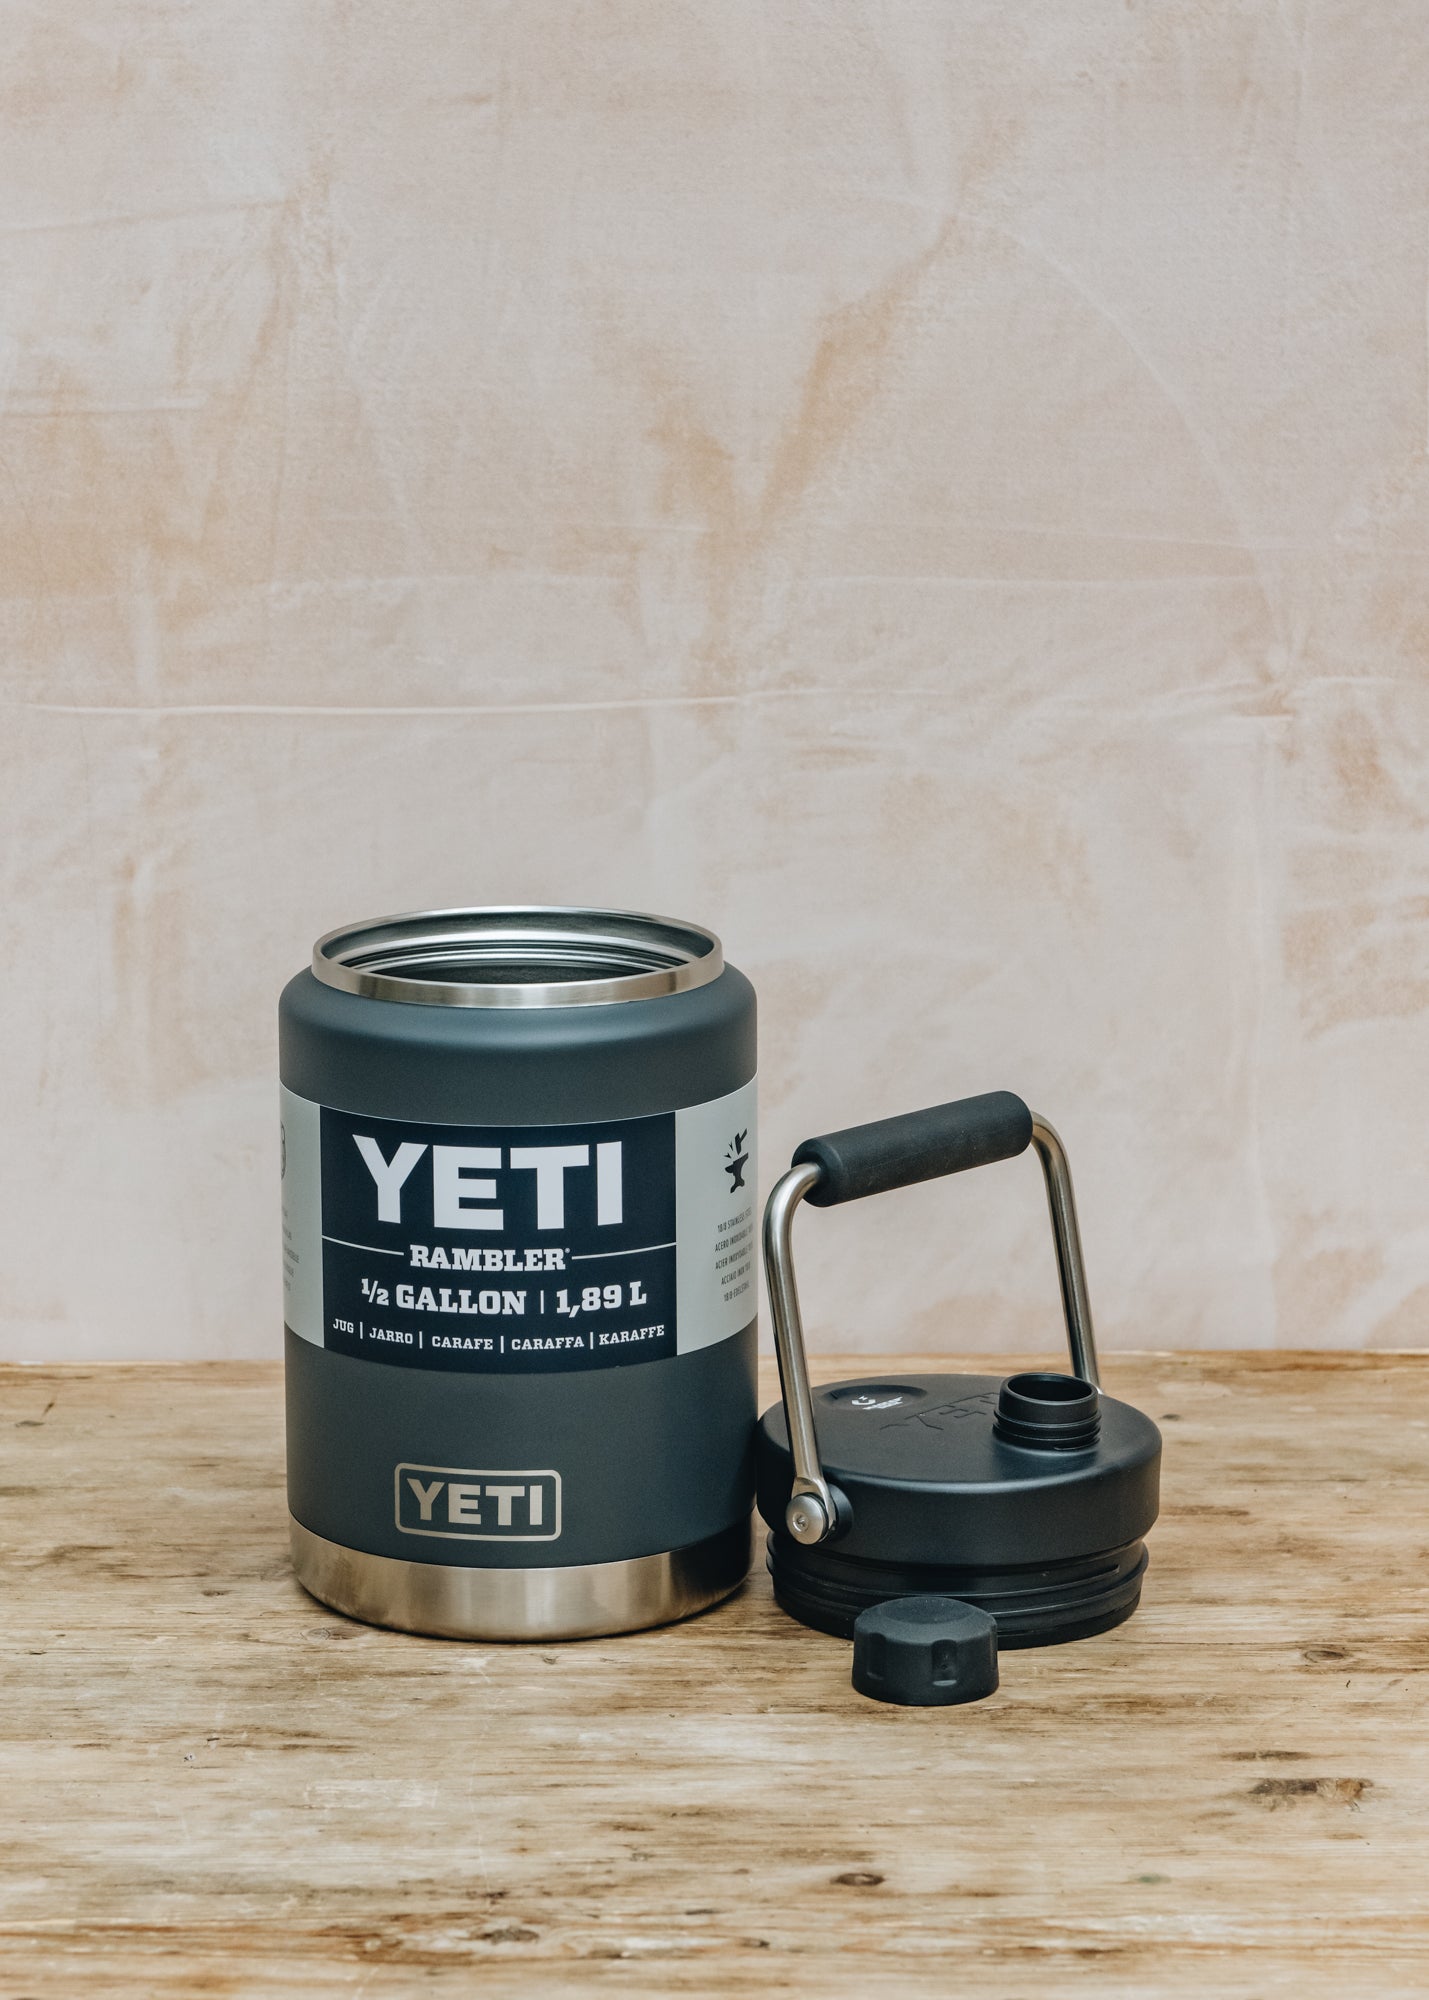 Yeti - Rambler Half Gallon Jug Charcoal